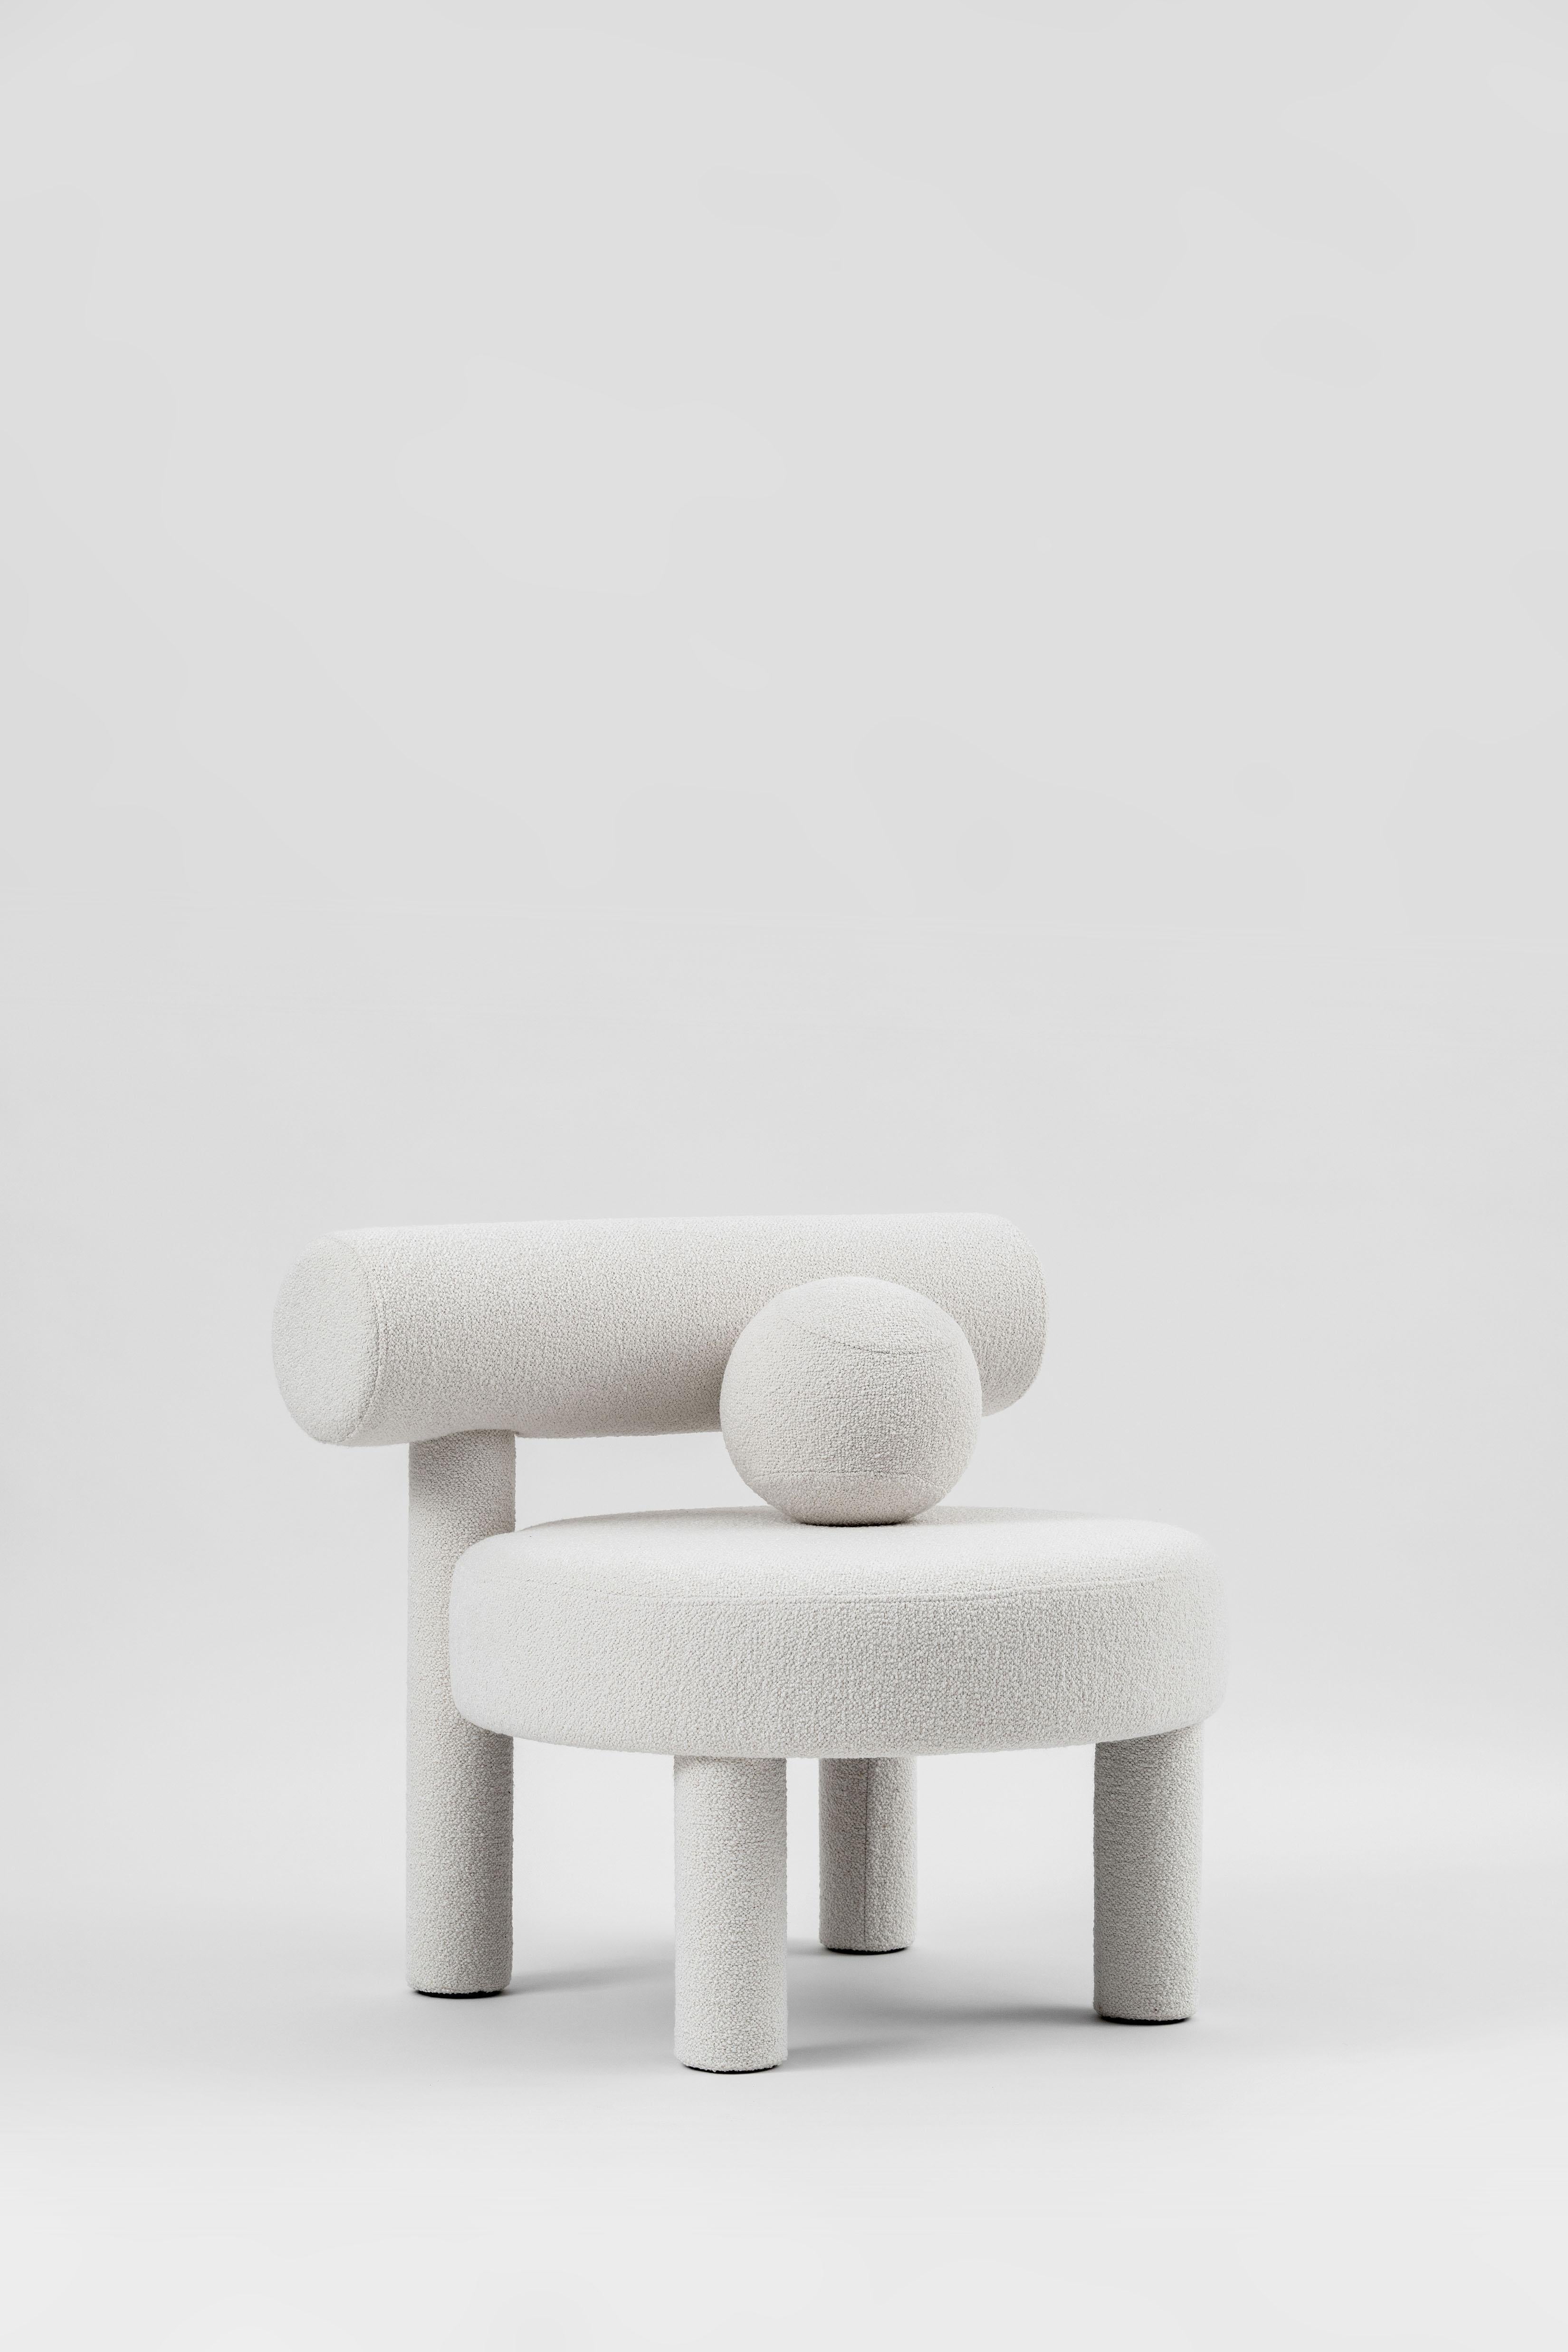 Contemporary Chair Gropius CS1 by NOOM, Dedar Tiger Mountain  For Sale 8